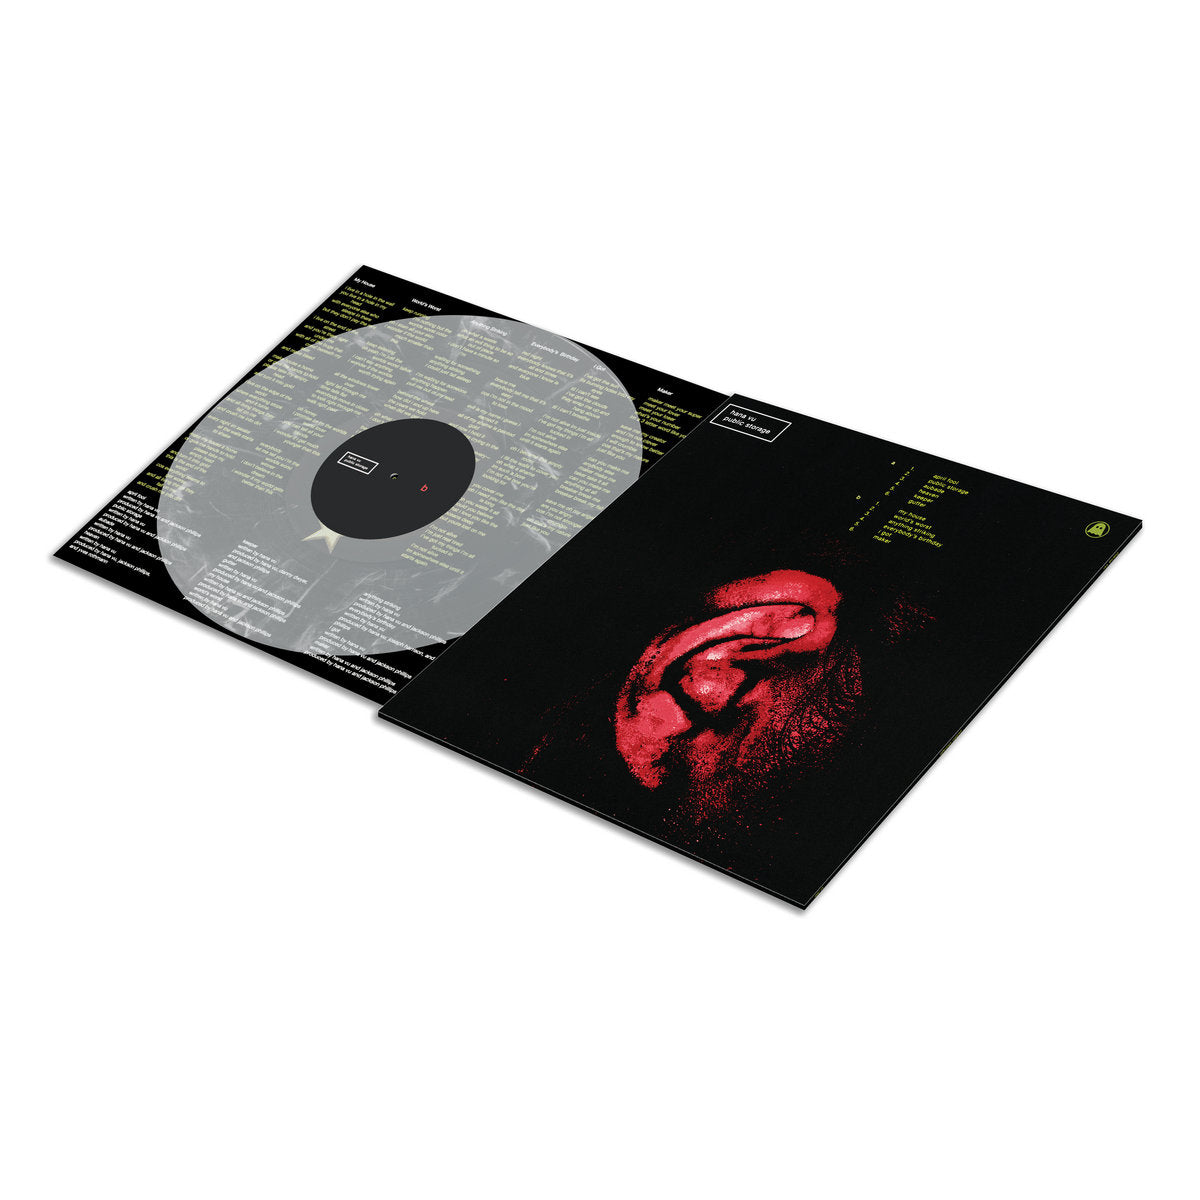 Hana Vu - Public Storage (Limited Edition on Clear Marble Vinyl)